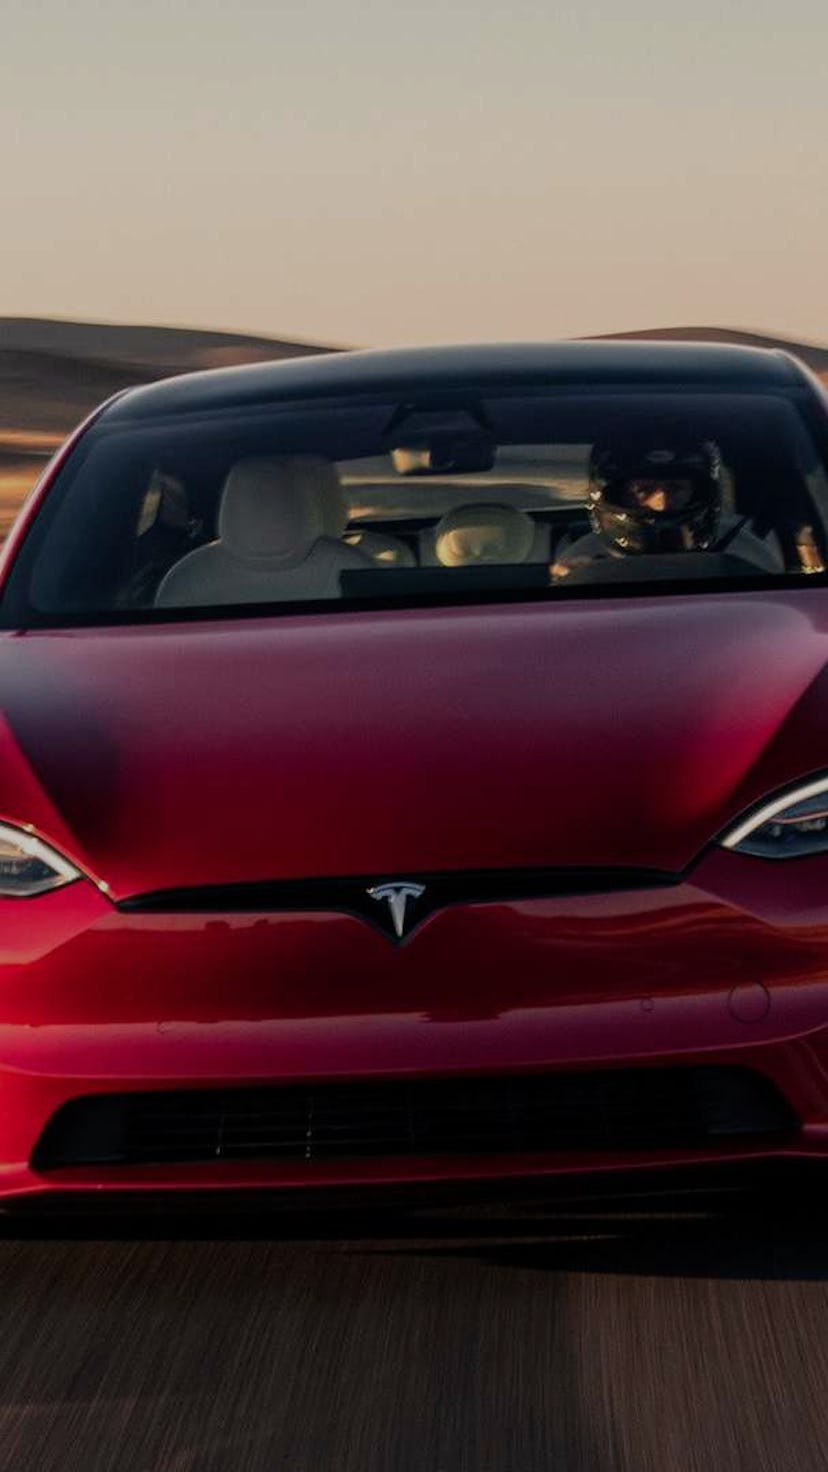 Tesla's Model S Plaid